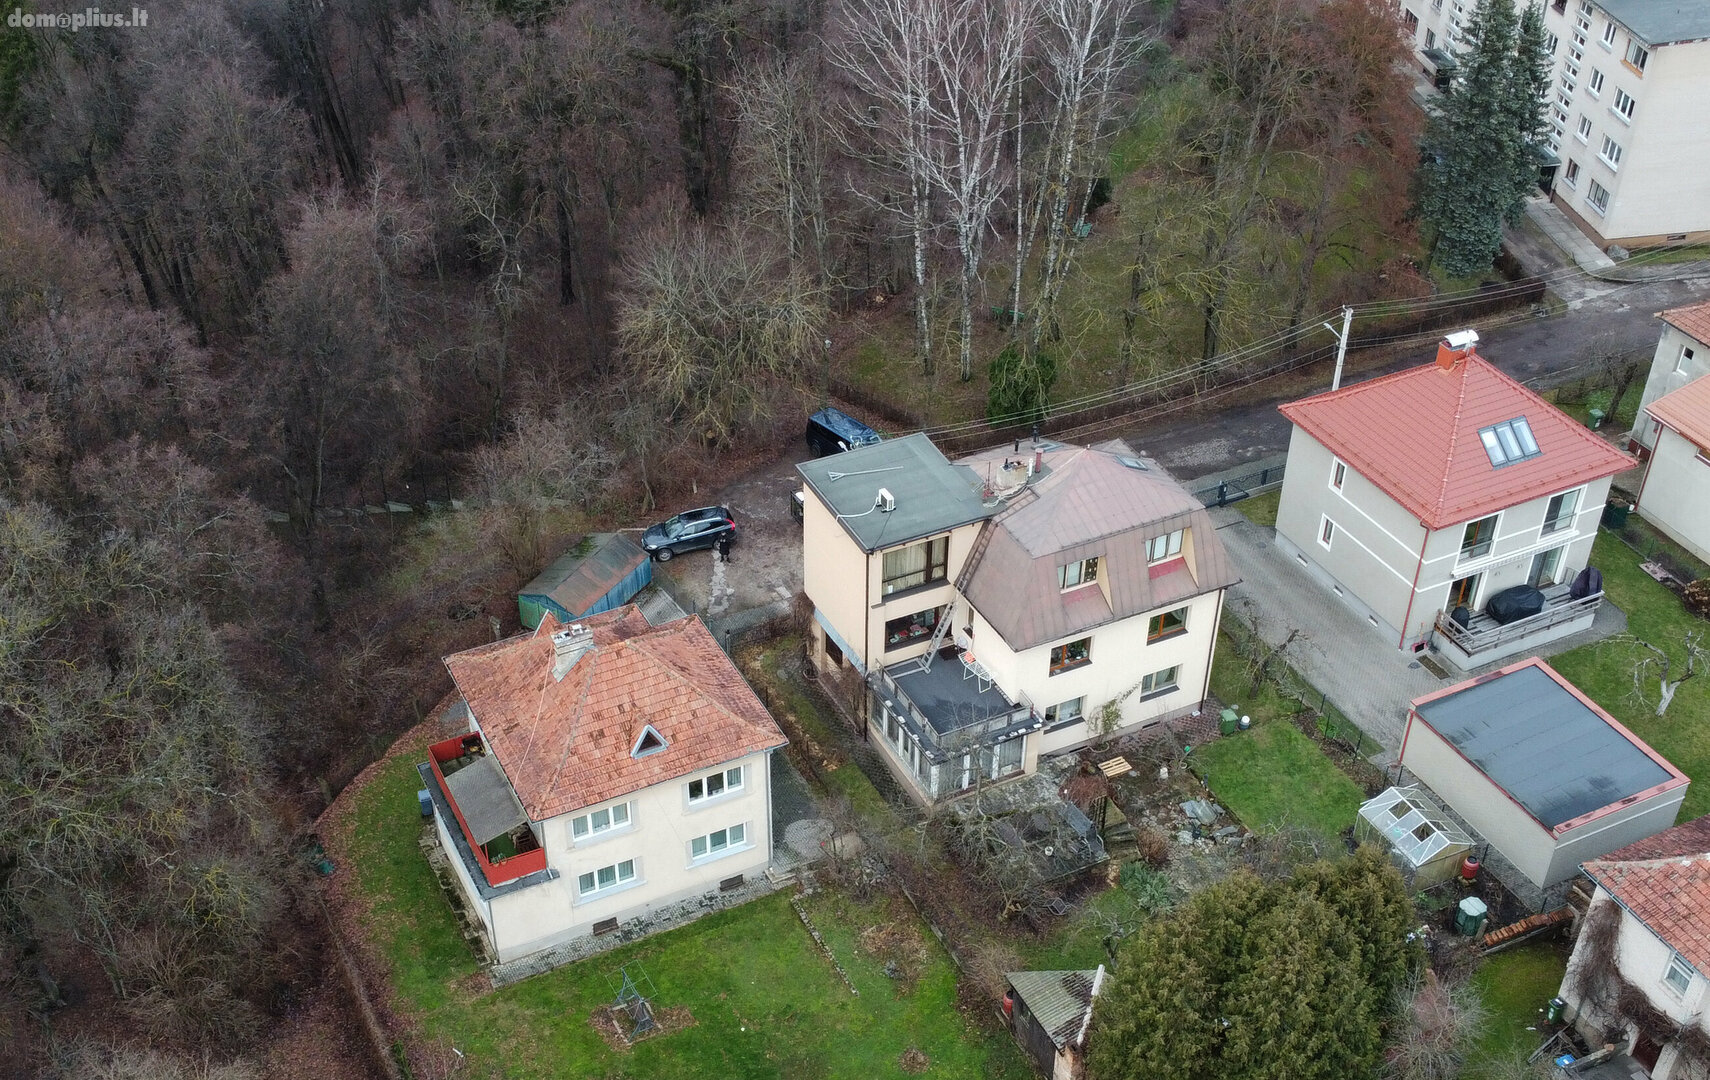 House for sale Kaune, Žaliakalnyje, Rimšės g.